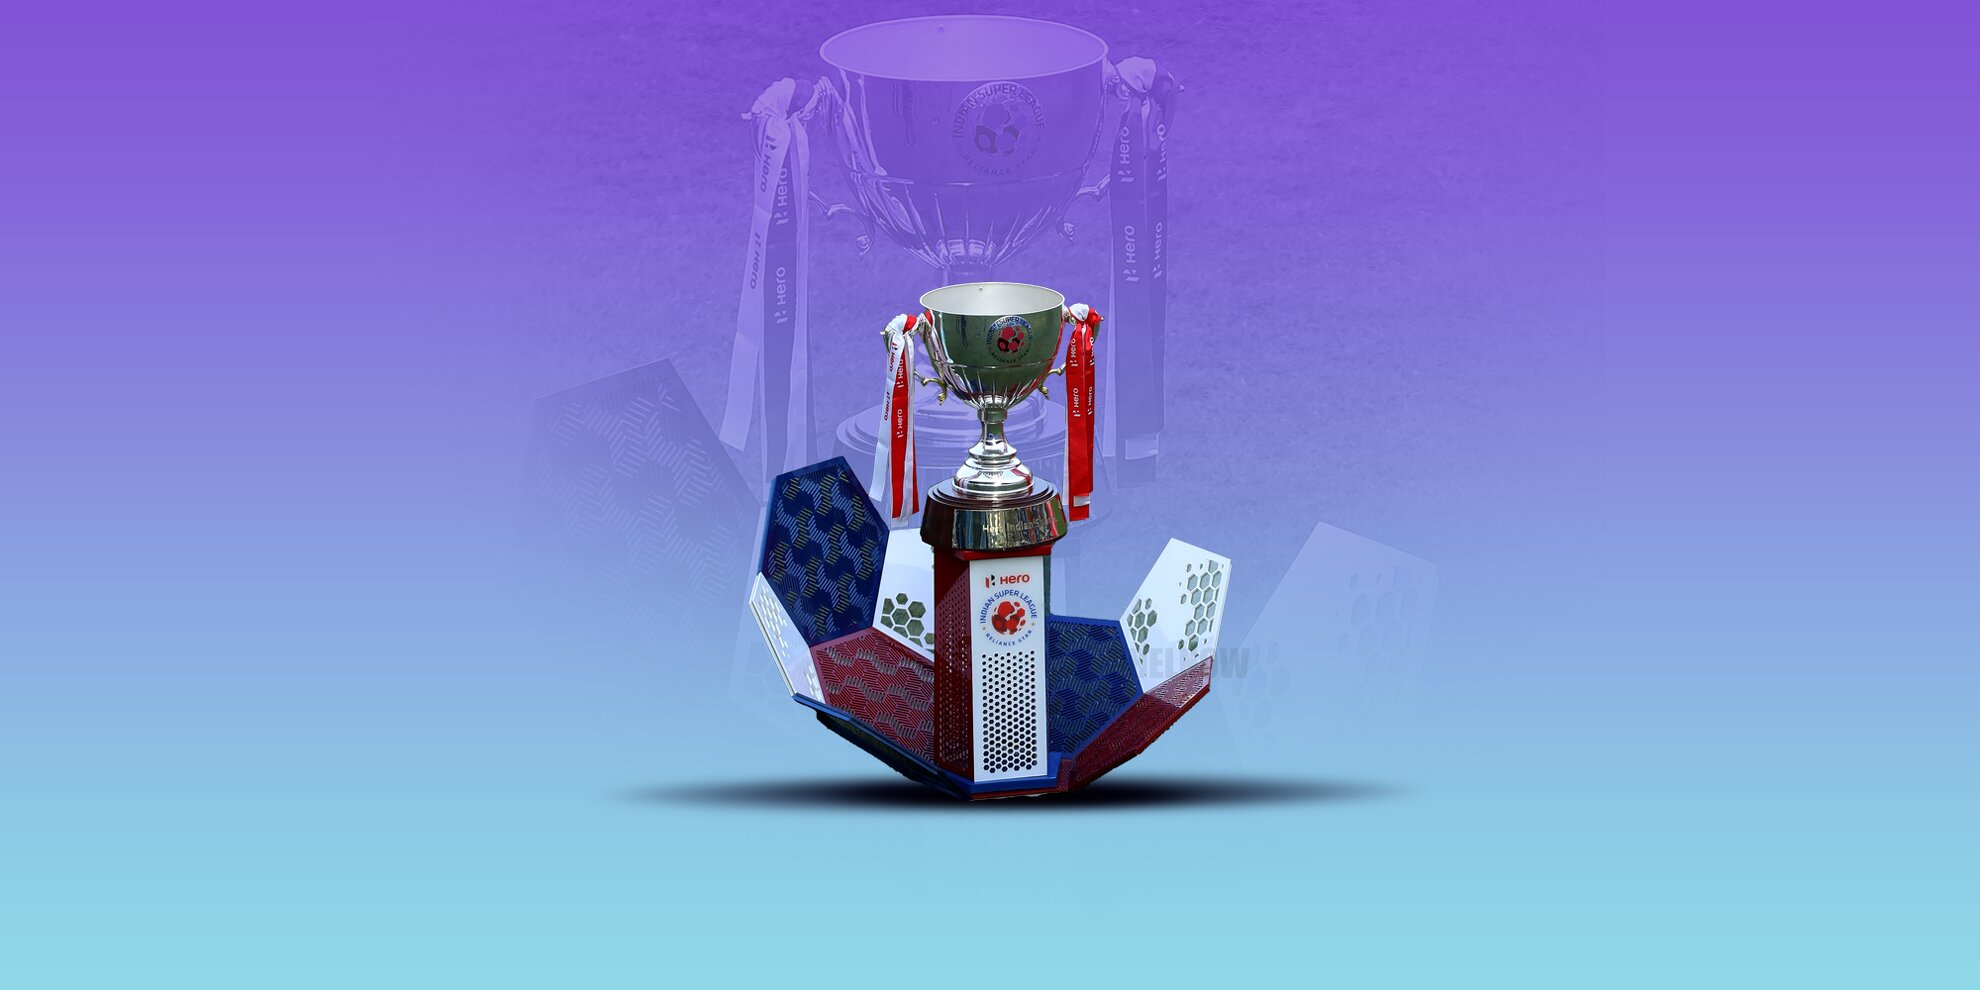 Indian Super League ISL